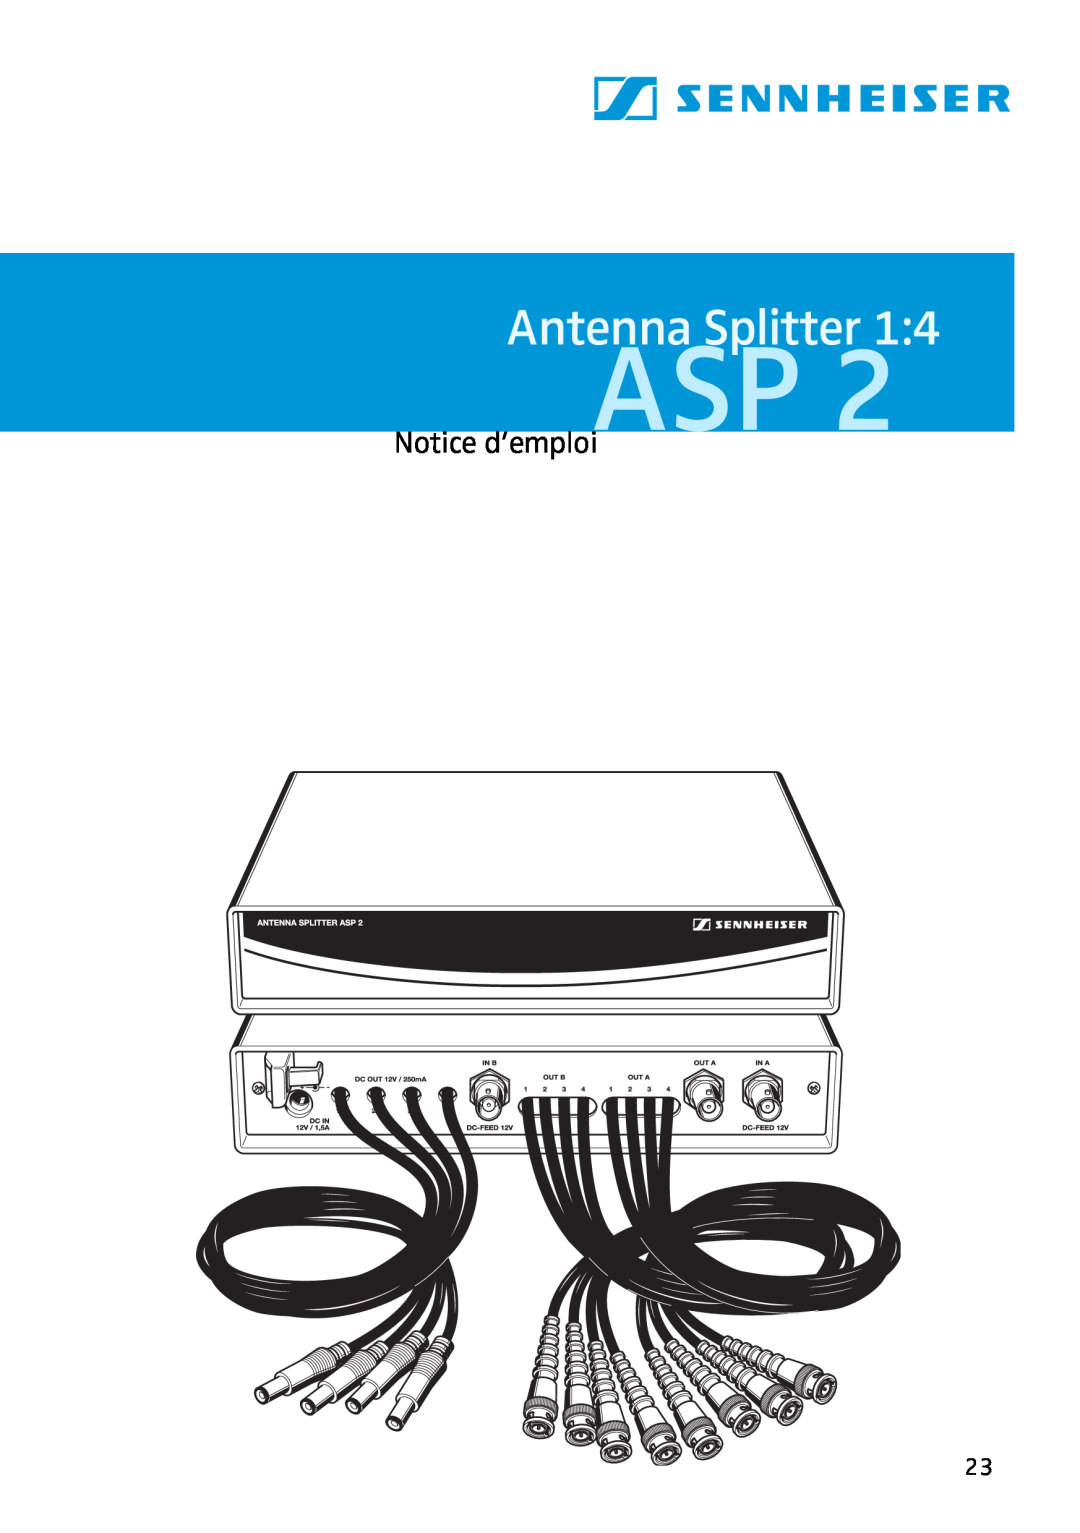 Sennheiser ASP 2 manual Notice d’emploi, Antenna Splitter 